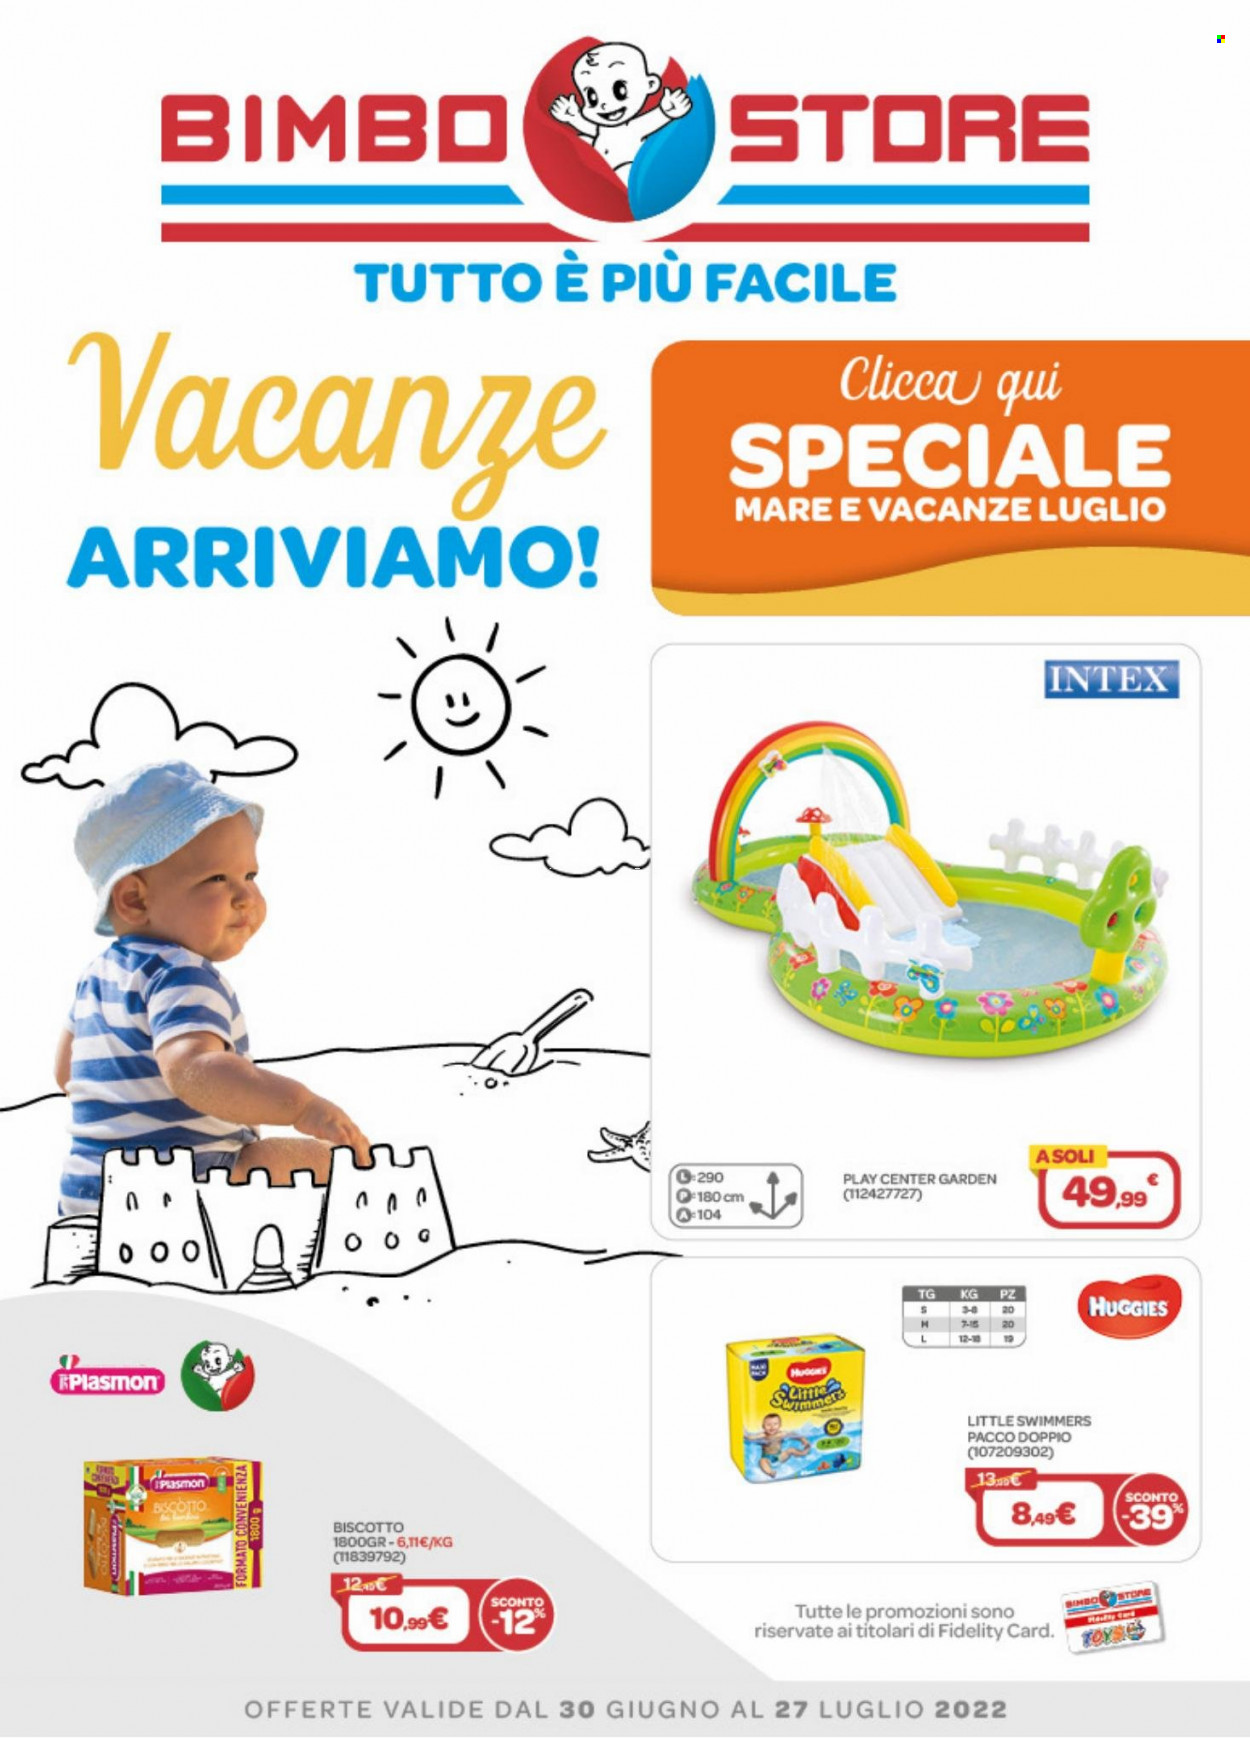 thumbnail - Volantino Bimbo Store - 30/6/2022 - 27/7/2022 - Prodotti in offerta - biscotti, Plasmon, Huggies. Pagina 1.